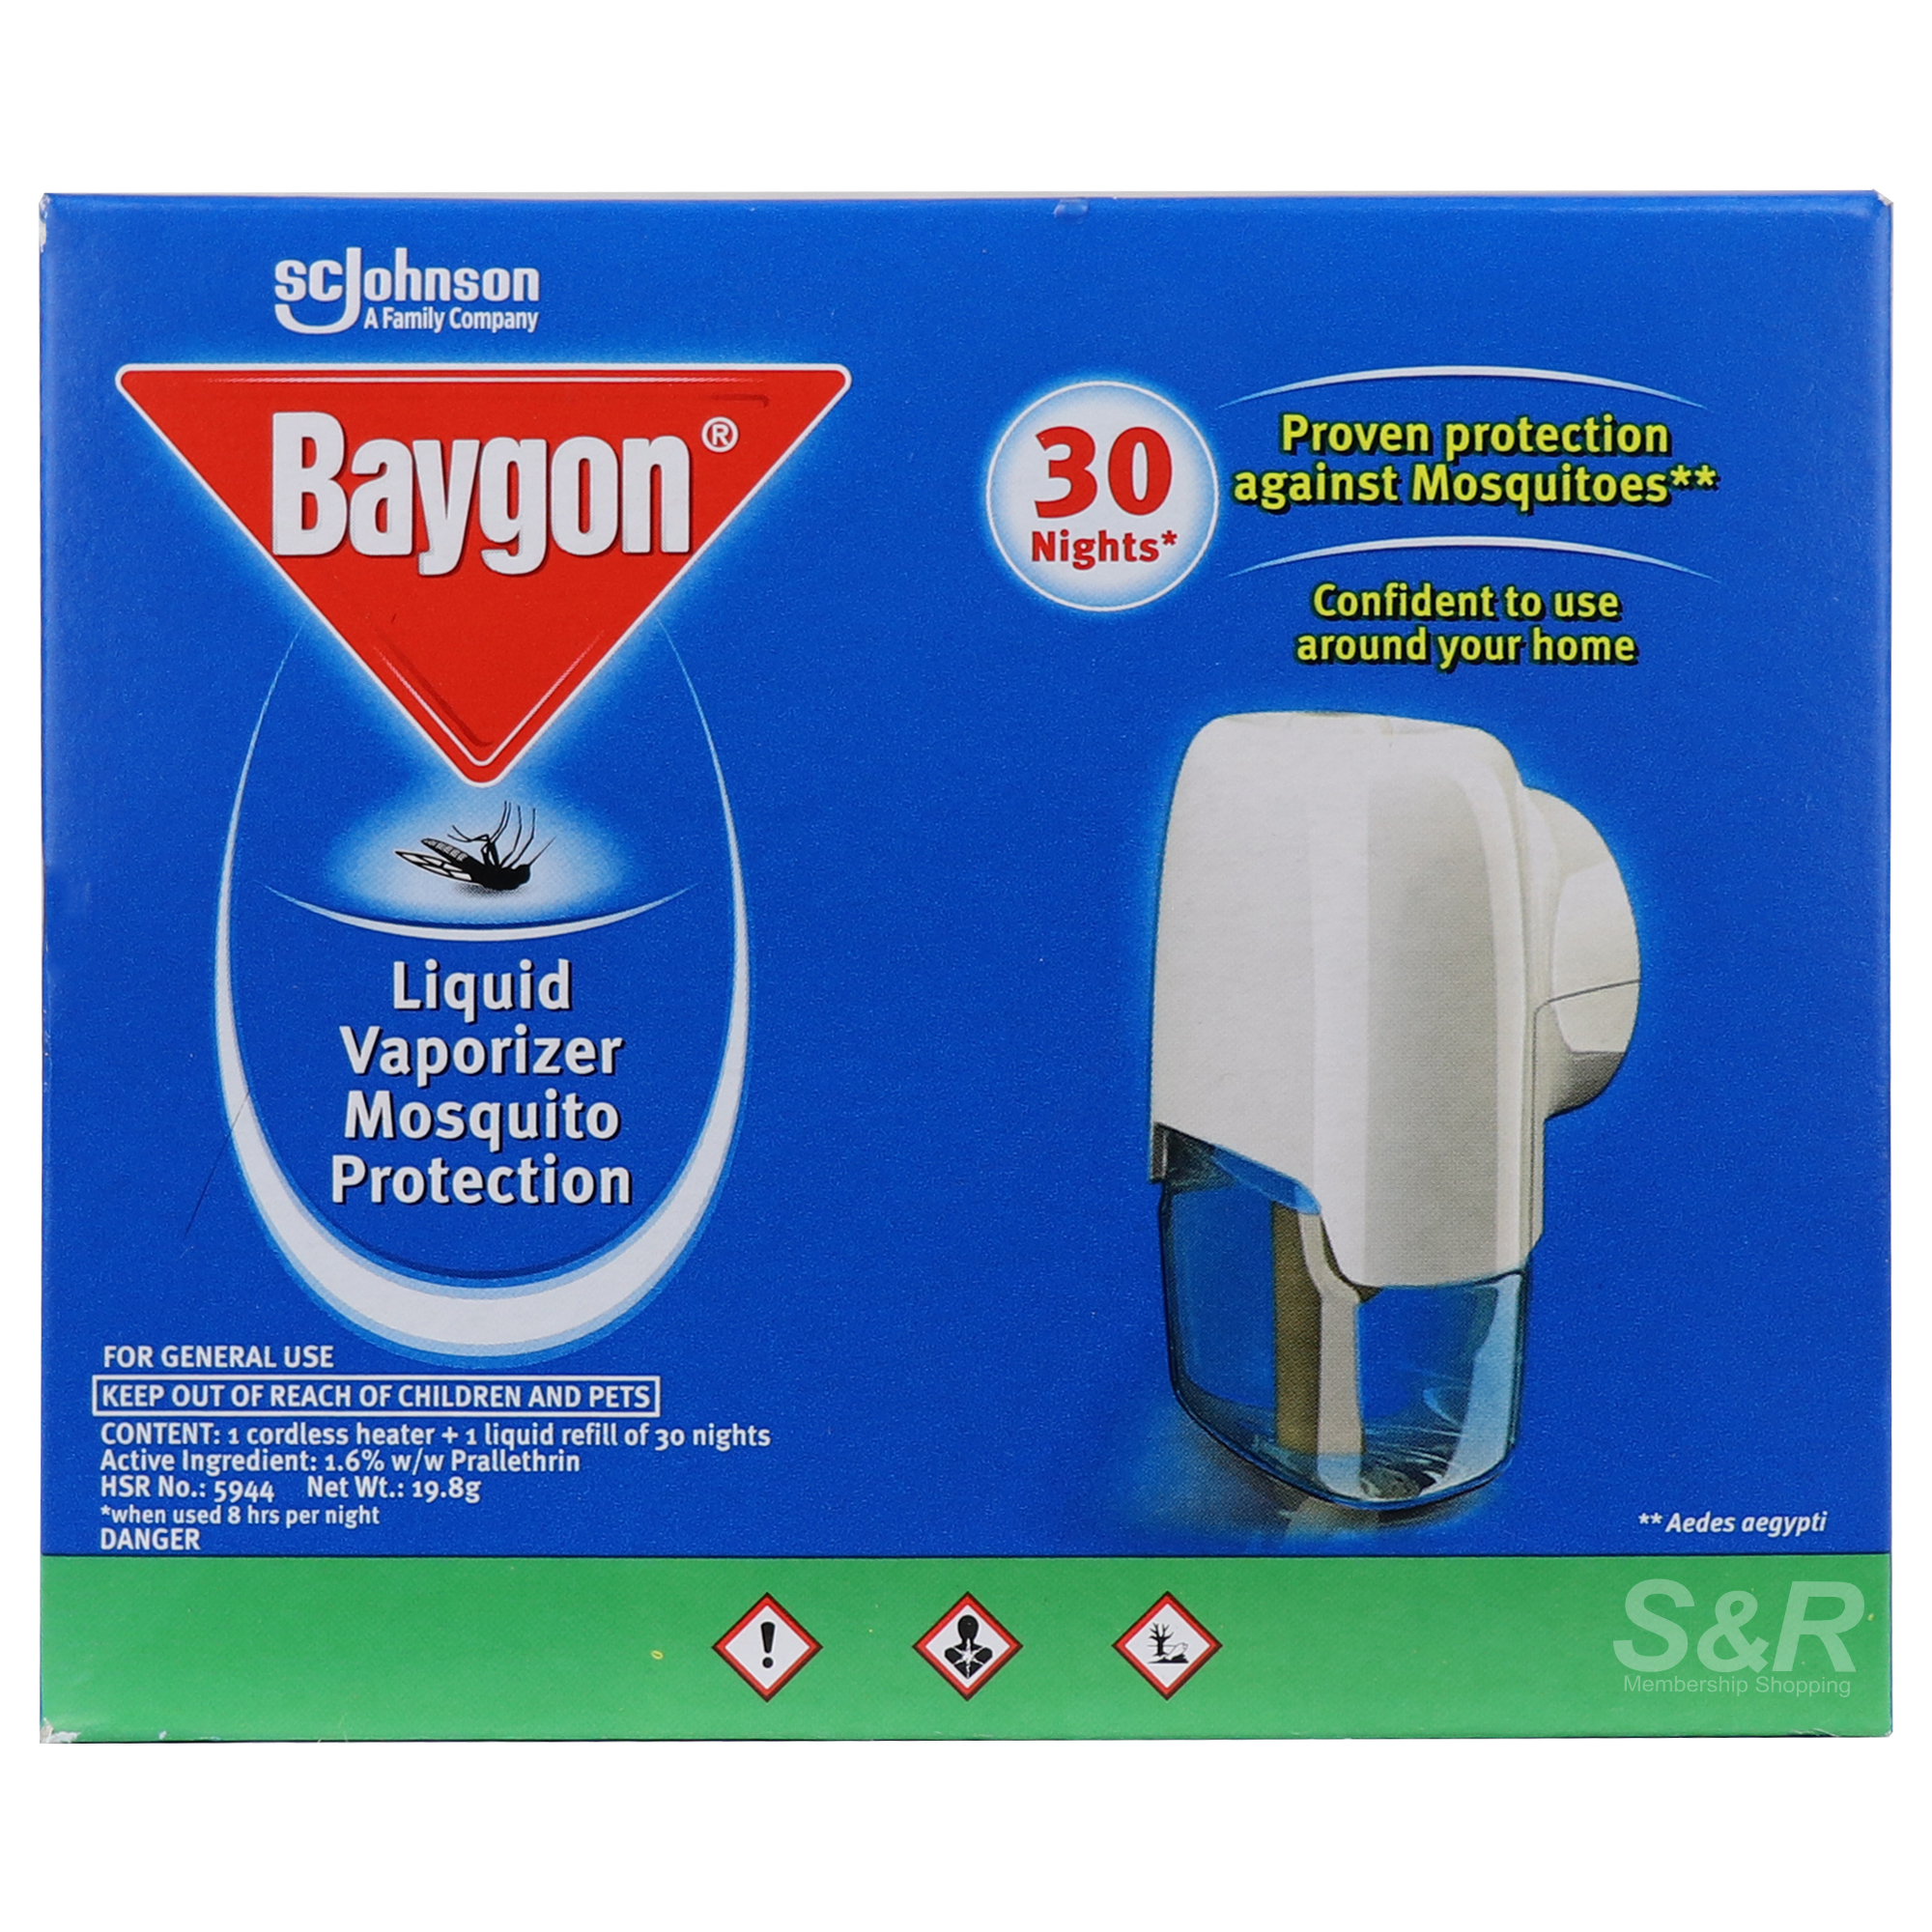 Baygon Liquid Vaporizer Mosquito Protection Starter Pack